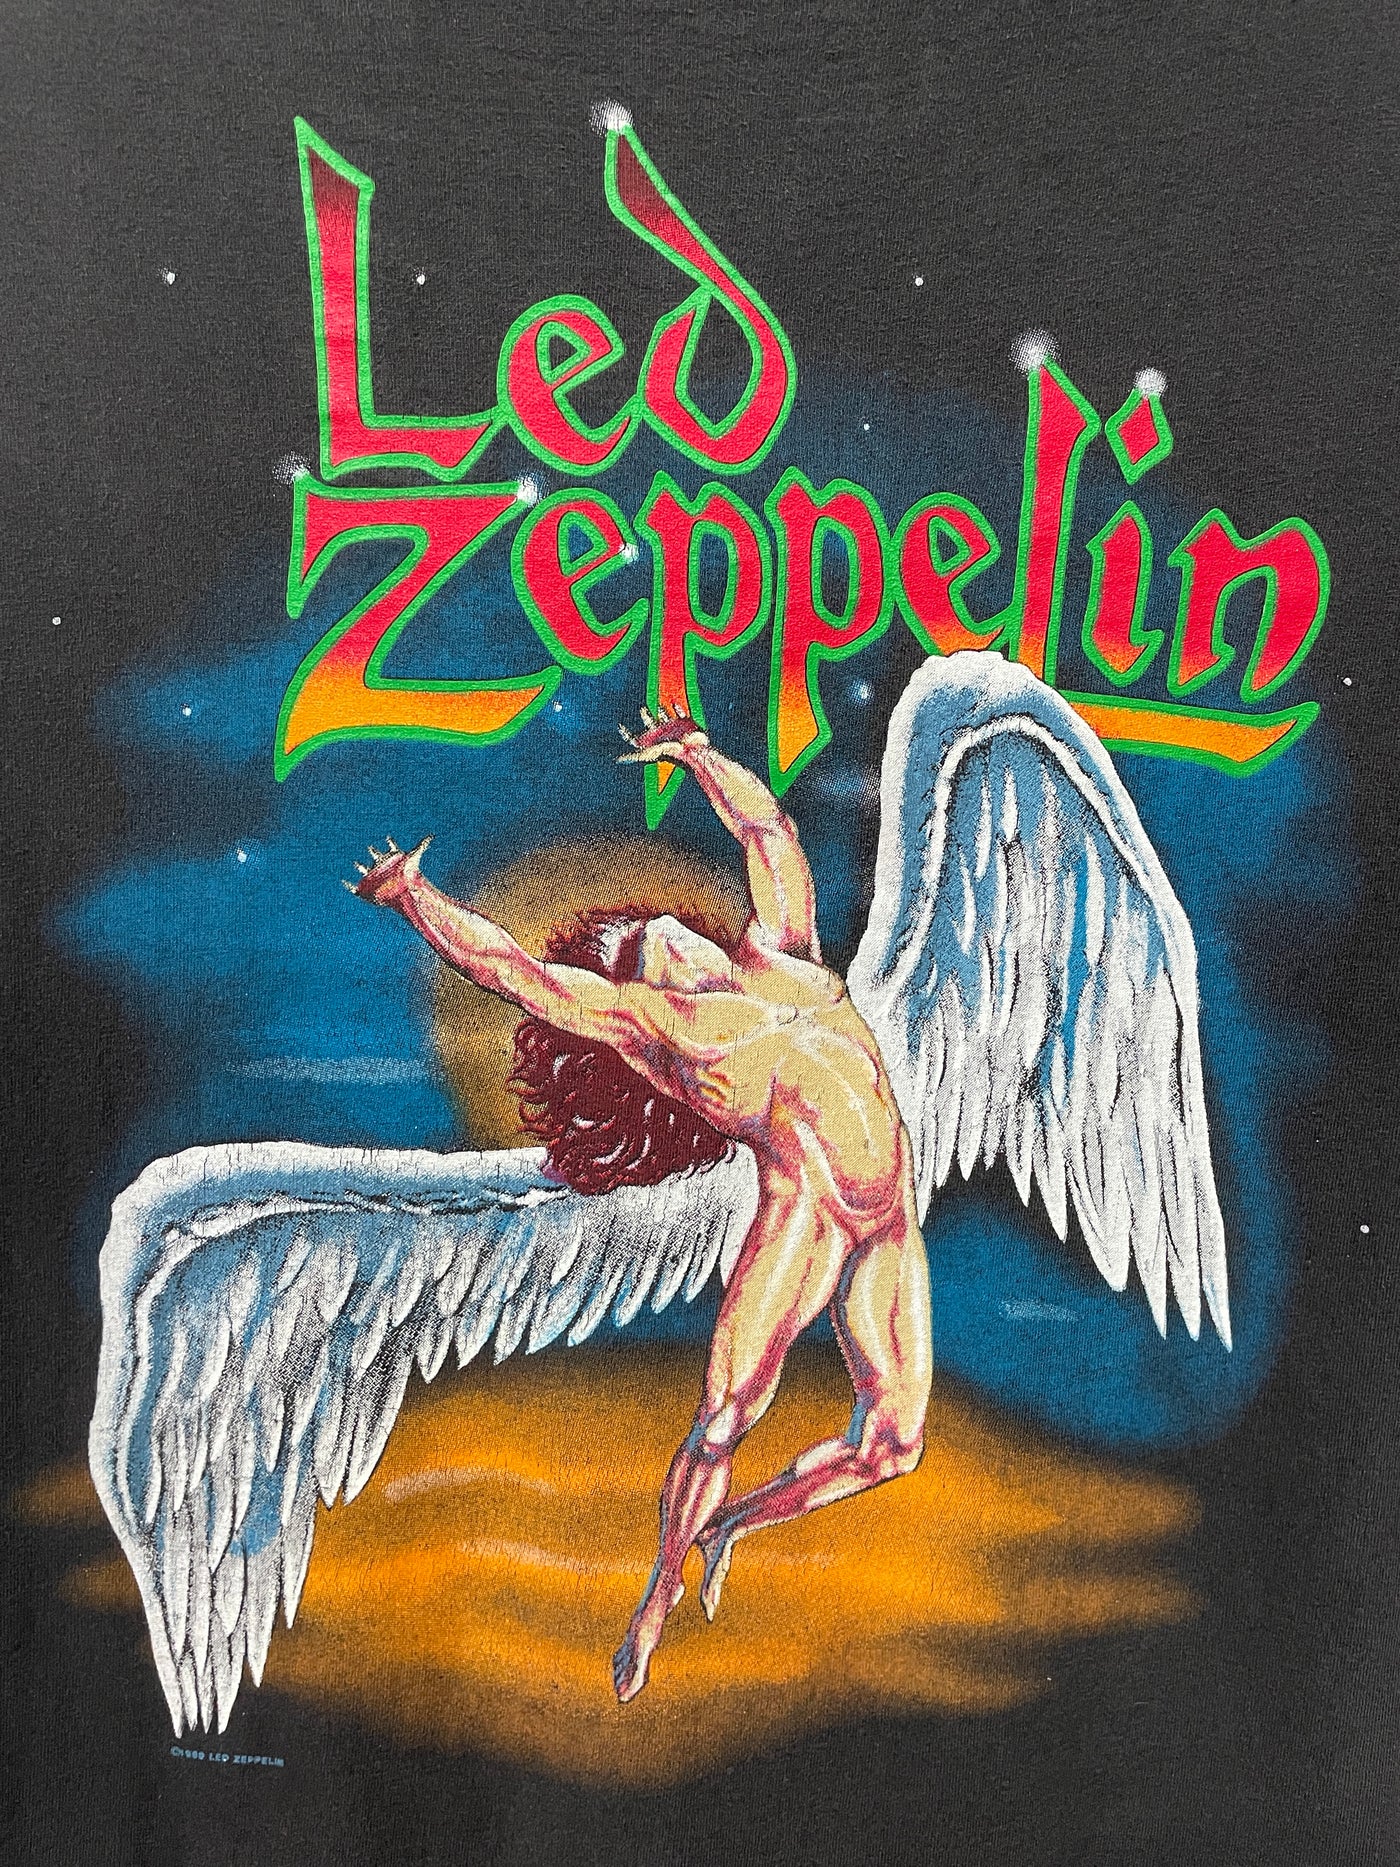 80s Led Zeppelin Rock Band Black T-shirt sz L